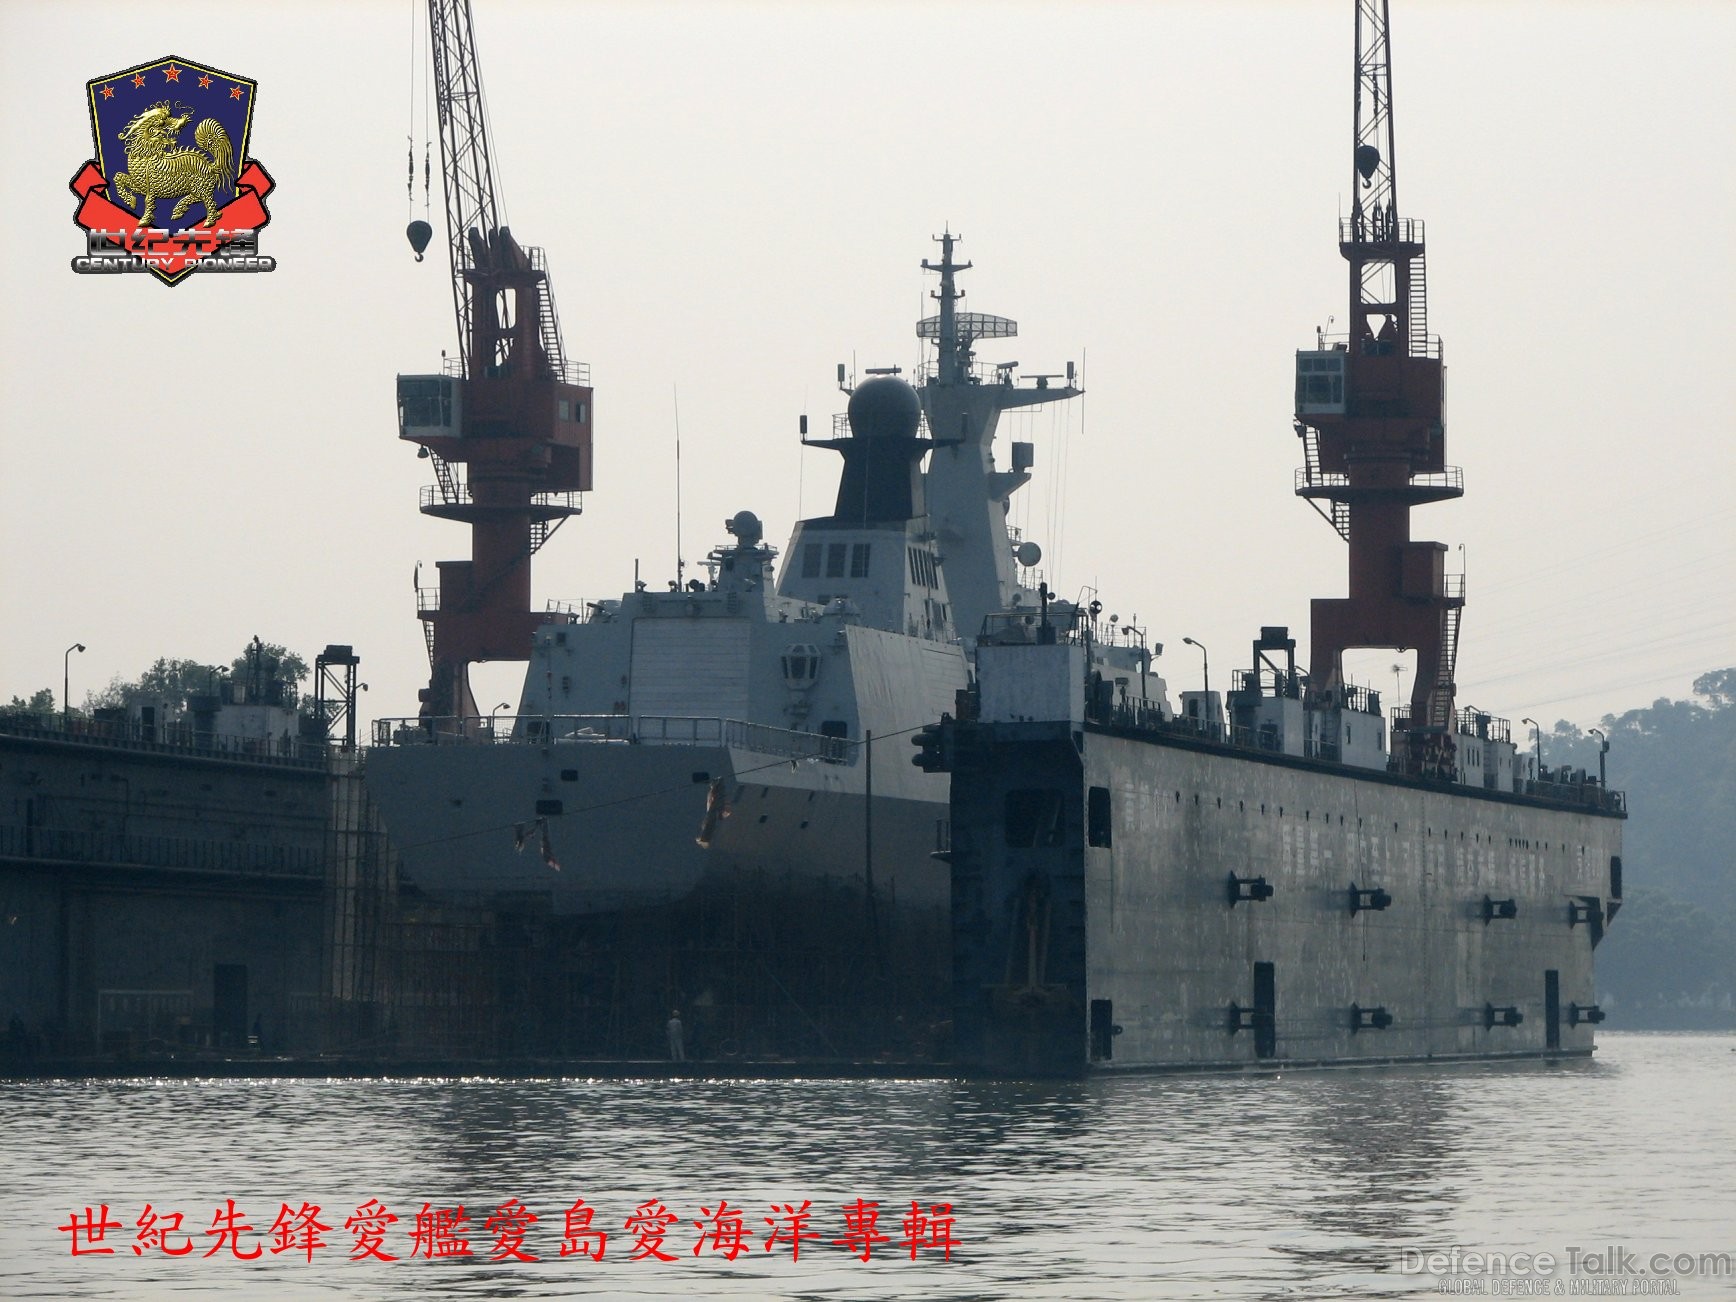 TYPE 054A - Peopleâs Liberation Army Navy